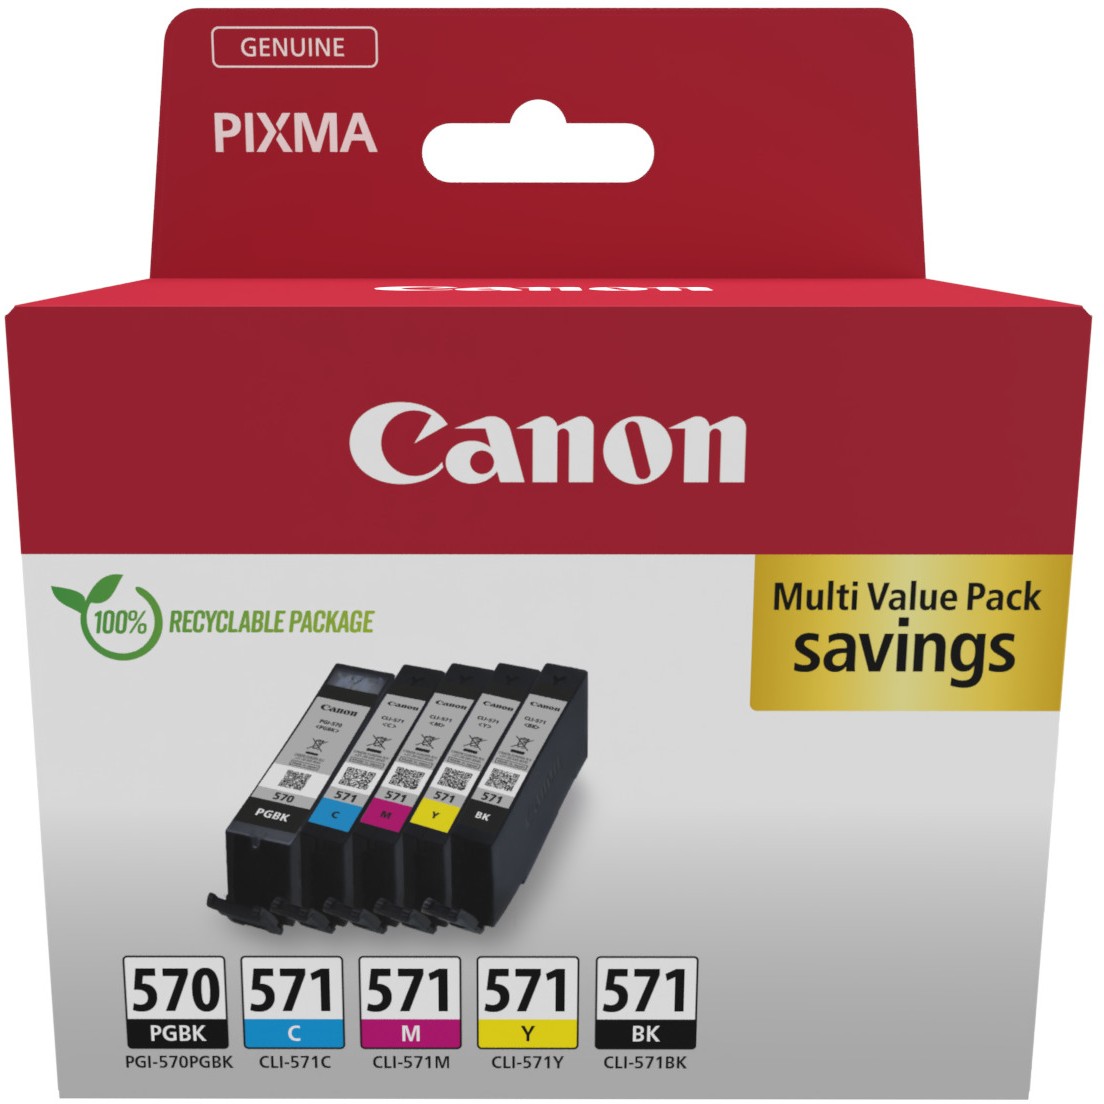 Canon 0372C006 ink cartridge - 0372C006